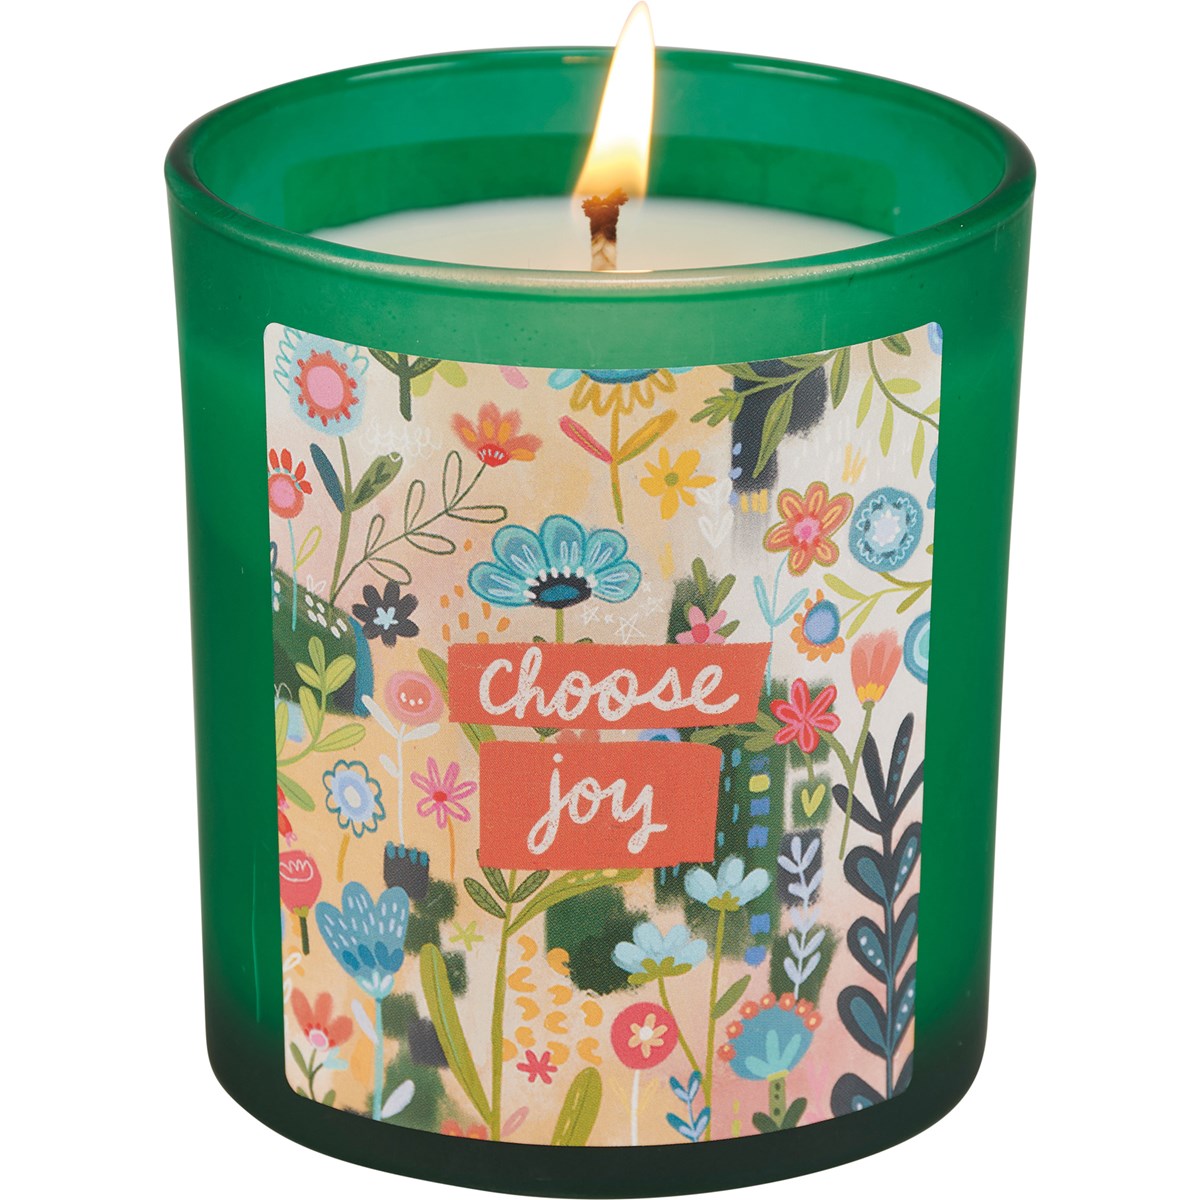 Choose Joy Green Candle - Soy Wax, Glass, Cotton